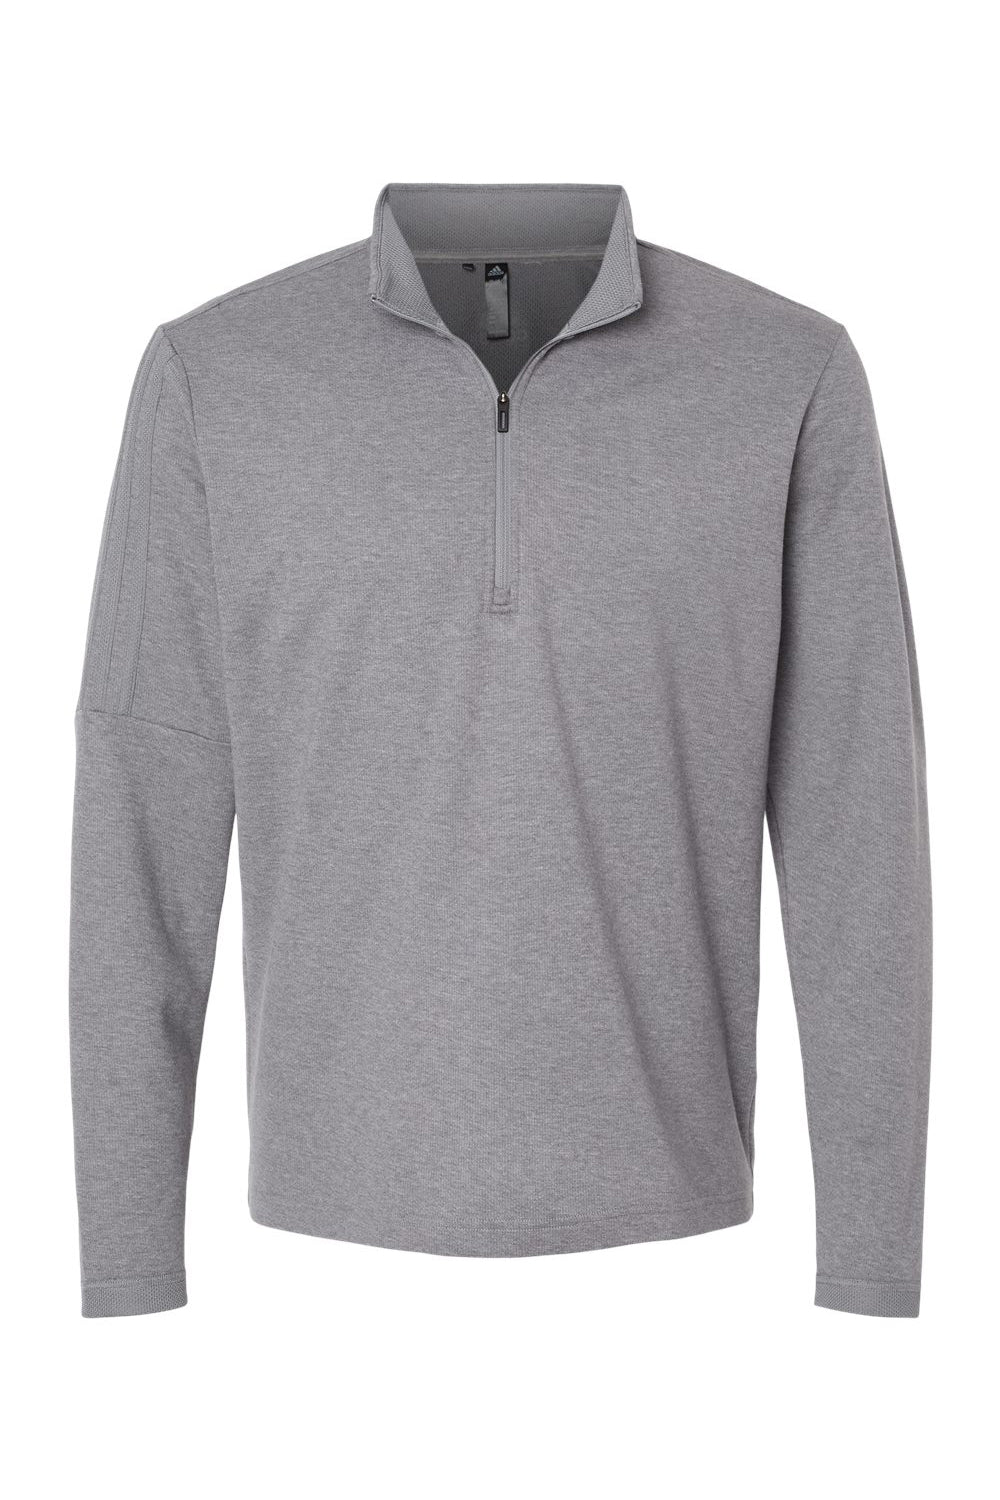 Adidas A554 Mens 3 Stripes Moisture Wicking 1/4 Zip Sweater Grey Melange Flat Front